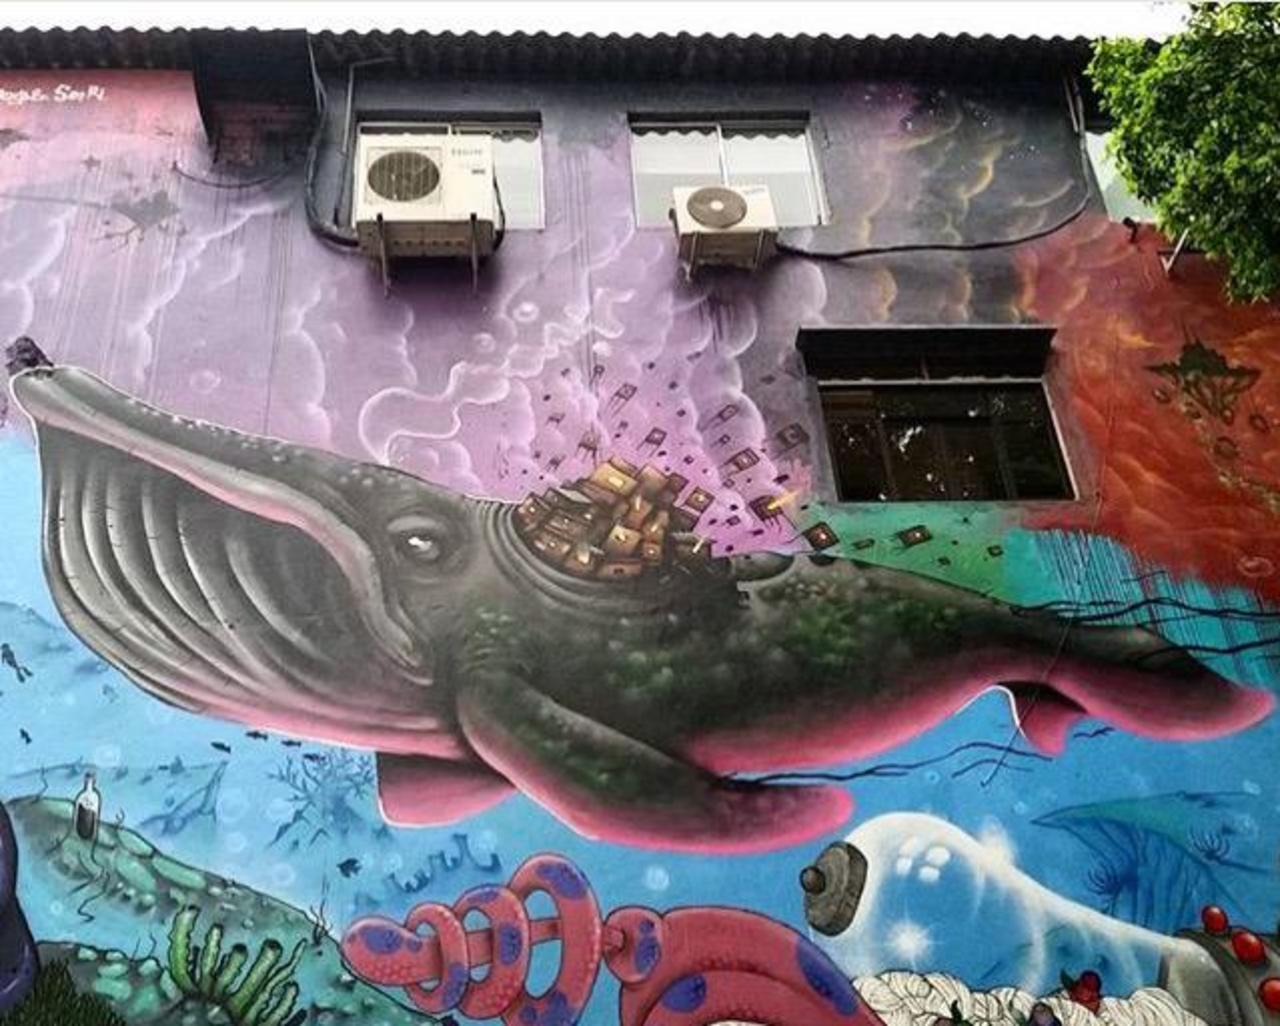 Street Art by joks_johnes Pinheiros, São Paulo 

#art #mural #graffiti #streetart http://t.co/41MJnCJOzy